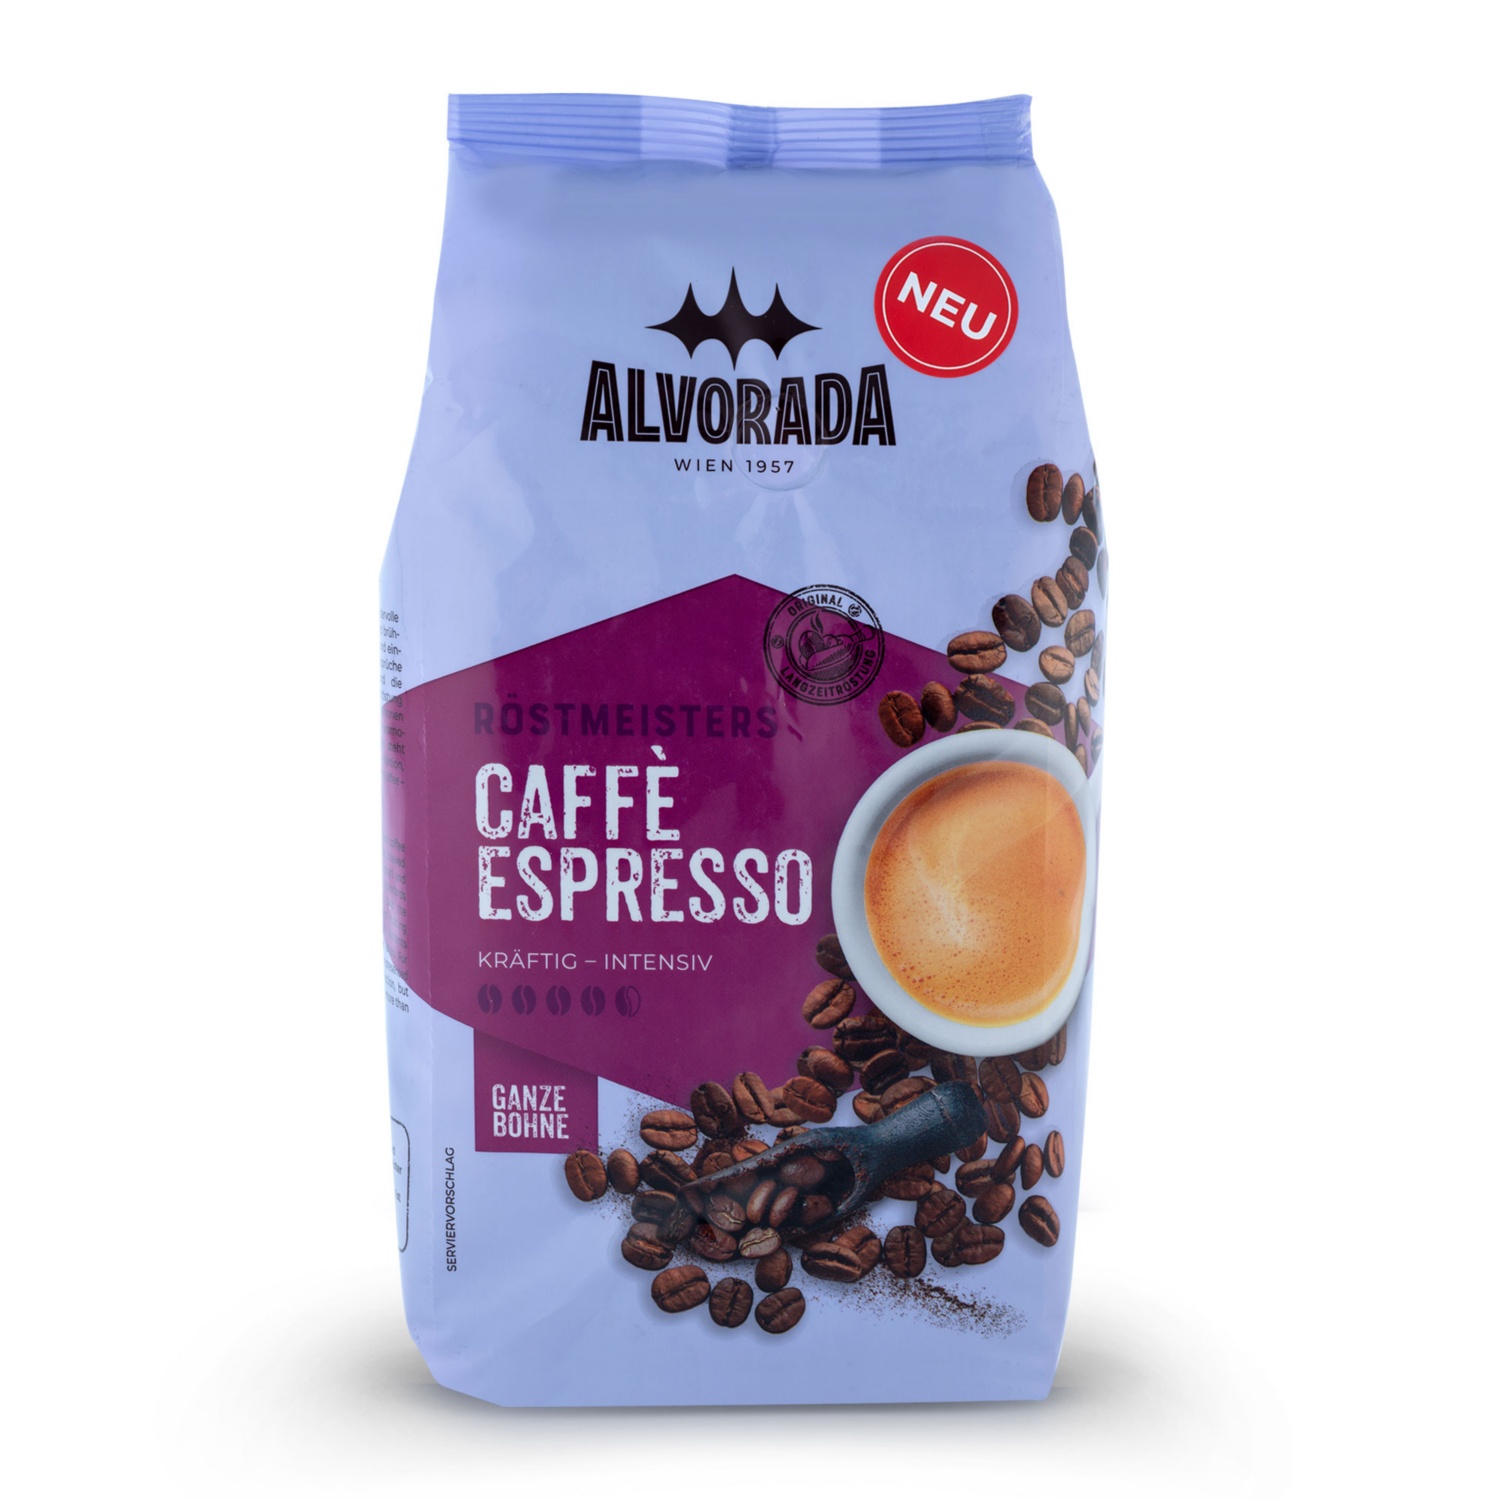 Röstmeisters Caffe, Espresso